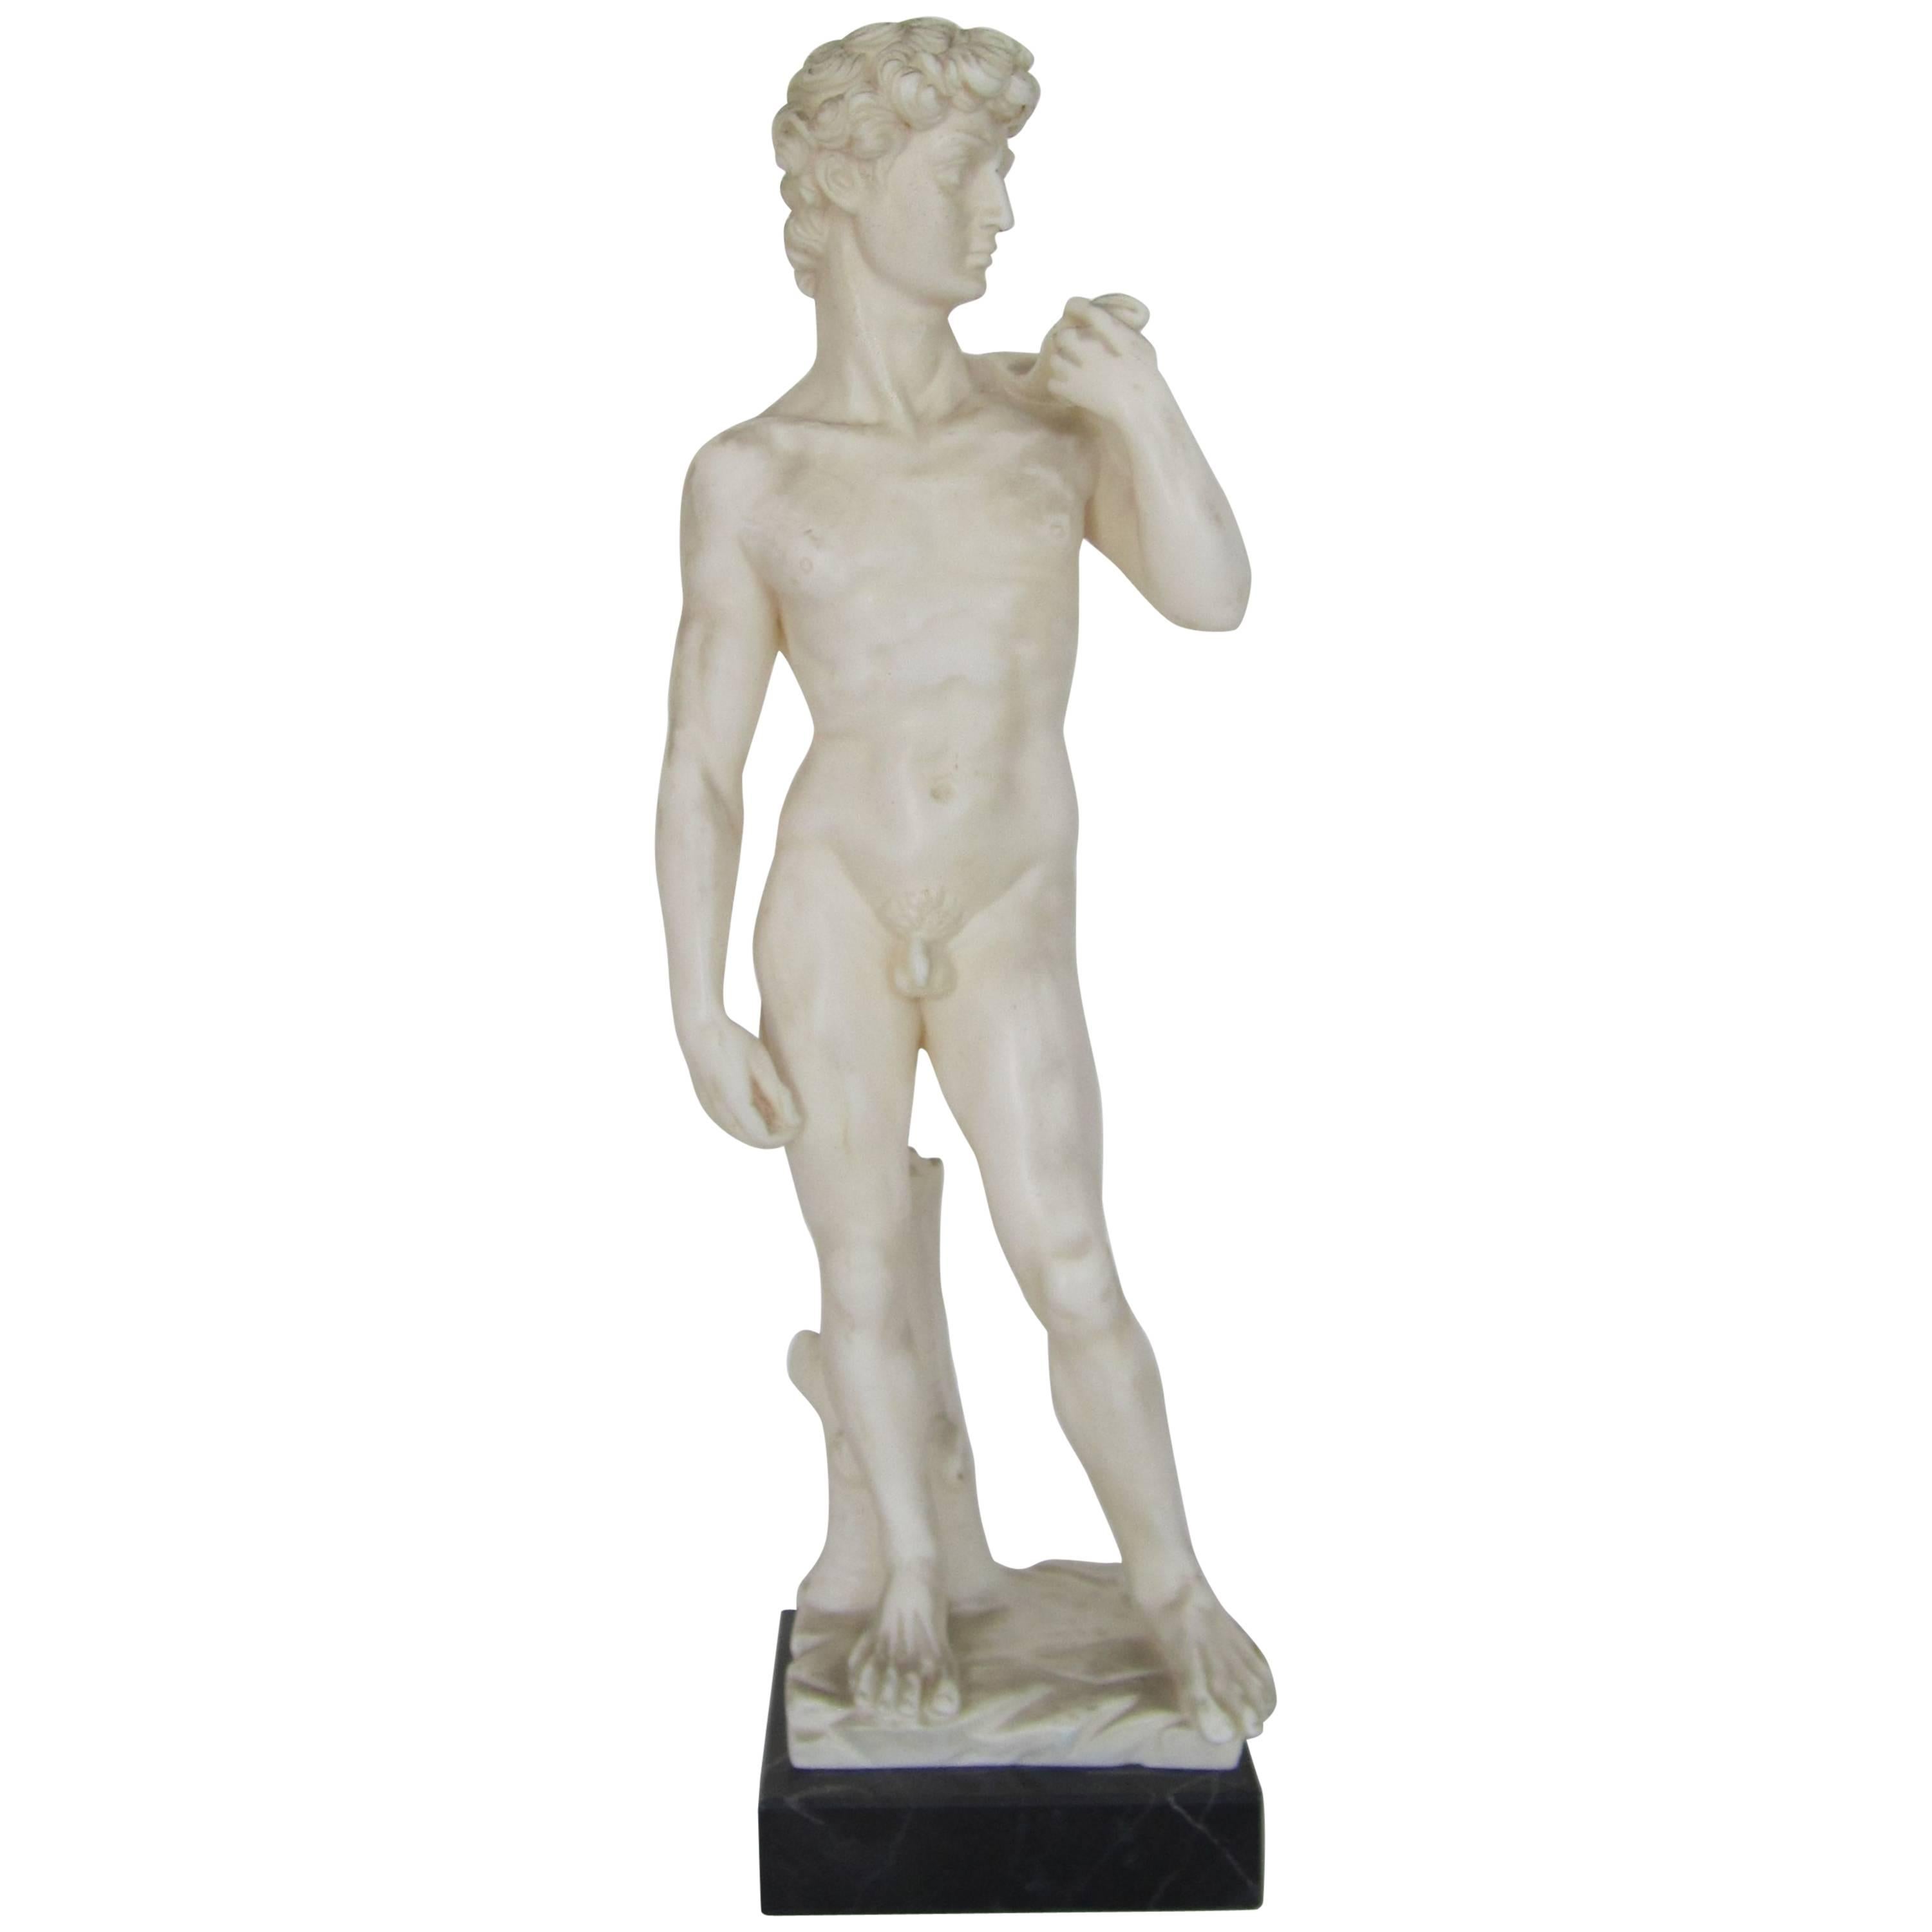 Klassische italienische römische Skulptur des 'David' auf schwarzem Marmorsockel